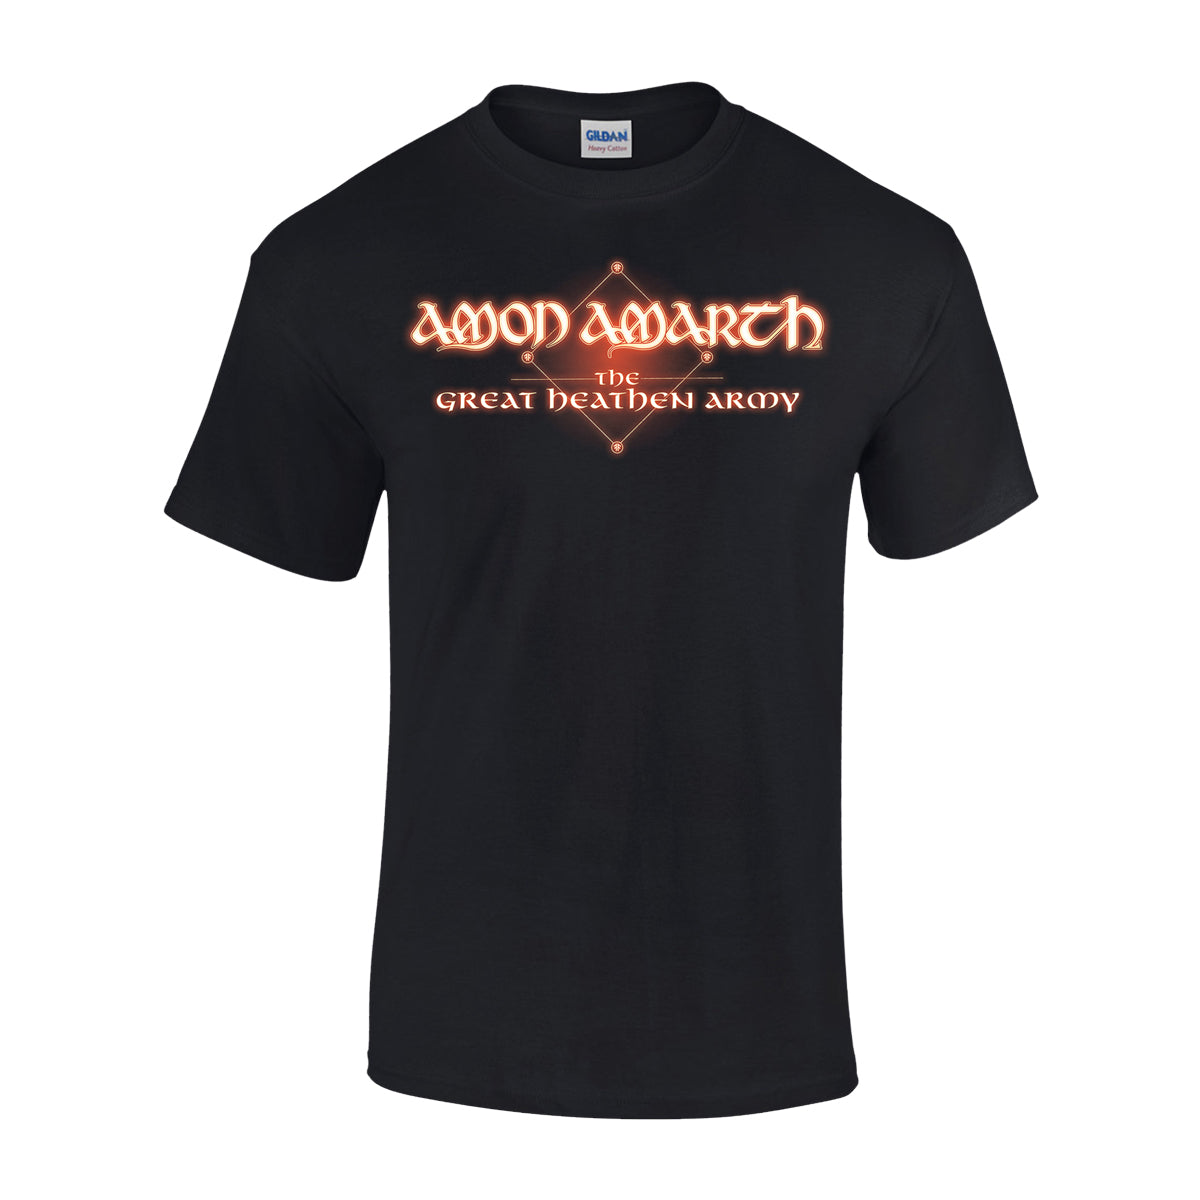 AMON AMARTH The Great Heathen Army Album Cover T-Shirt